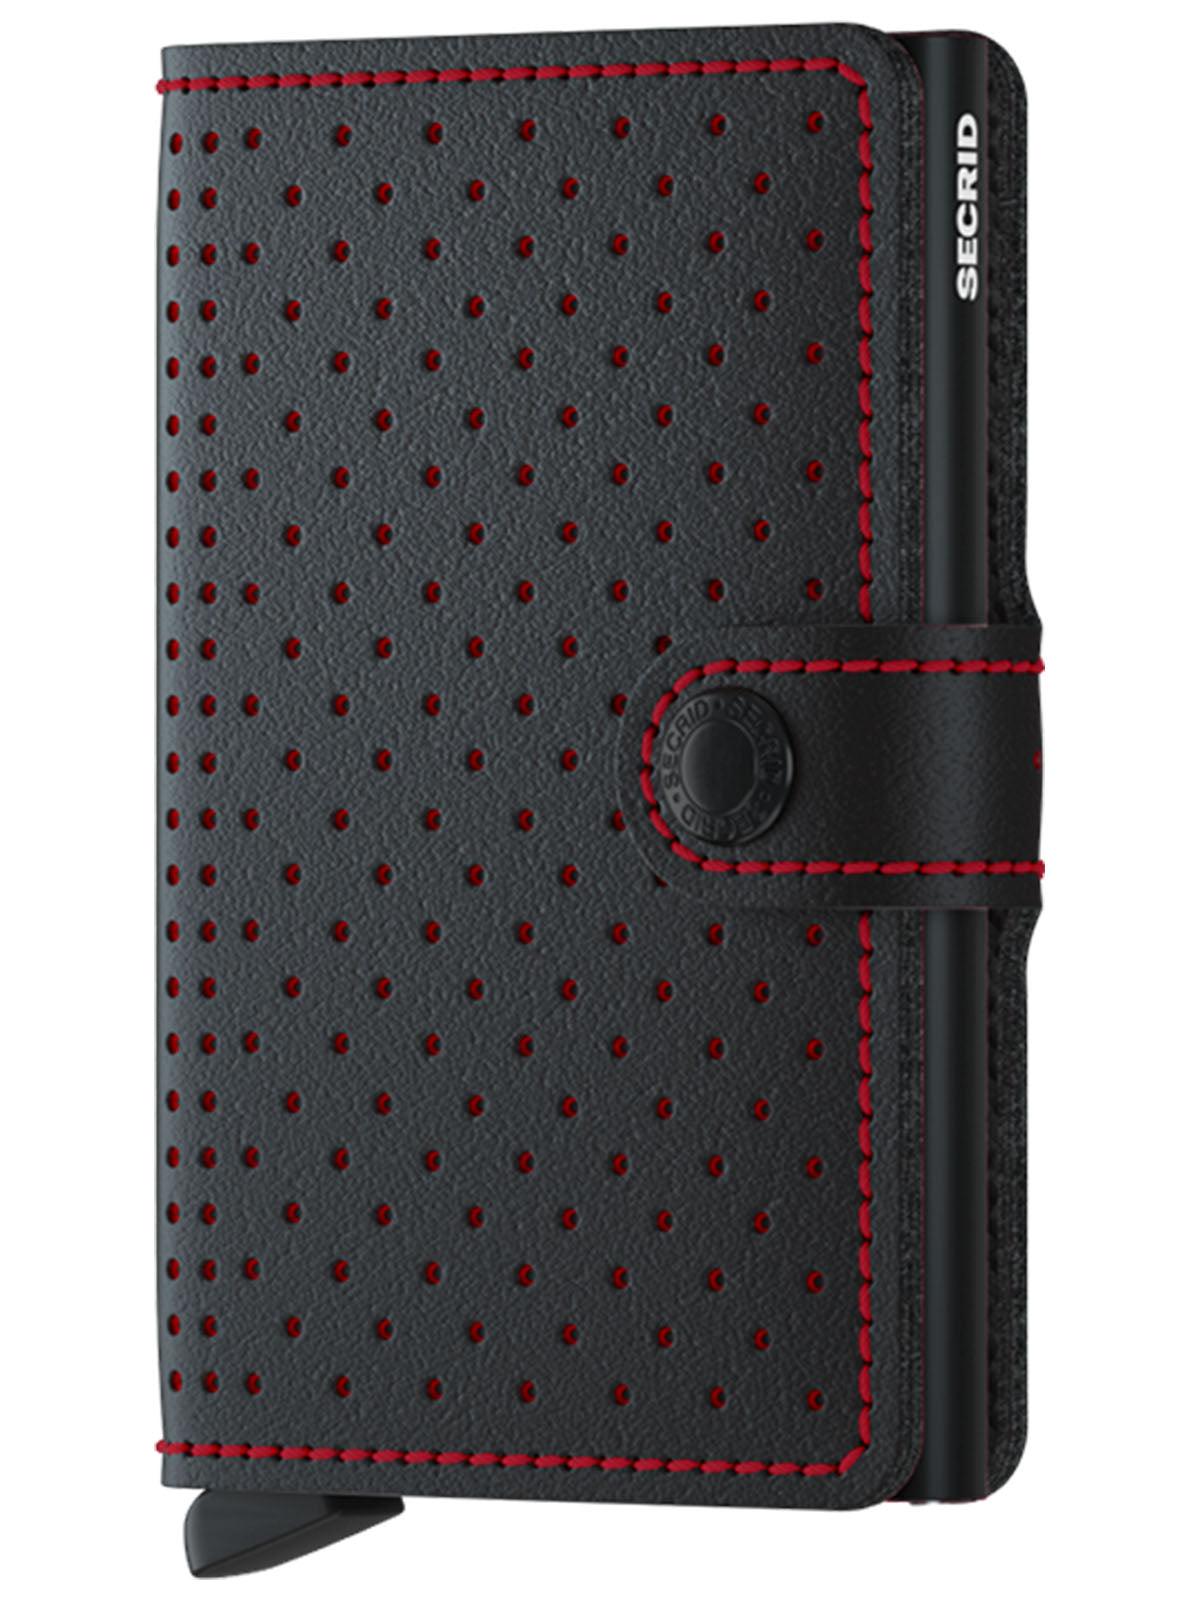 Secrid Miniwallet Perforated Black Red